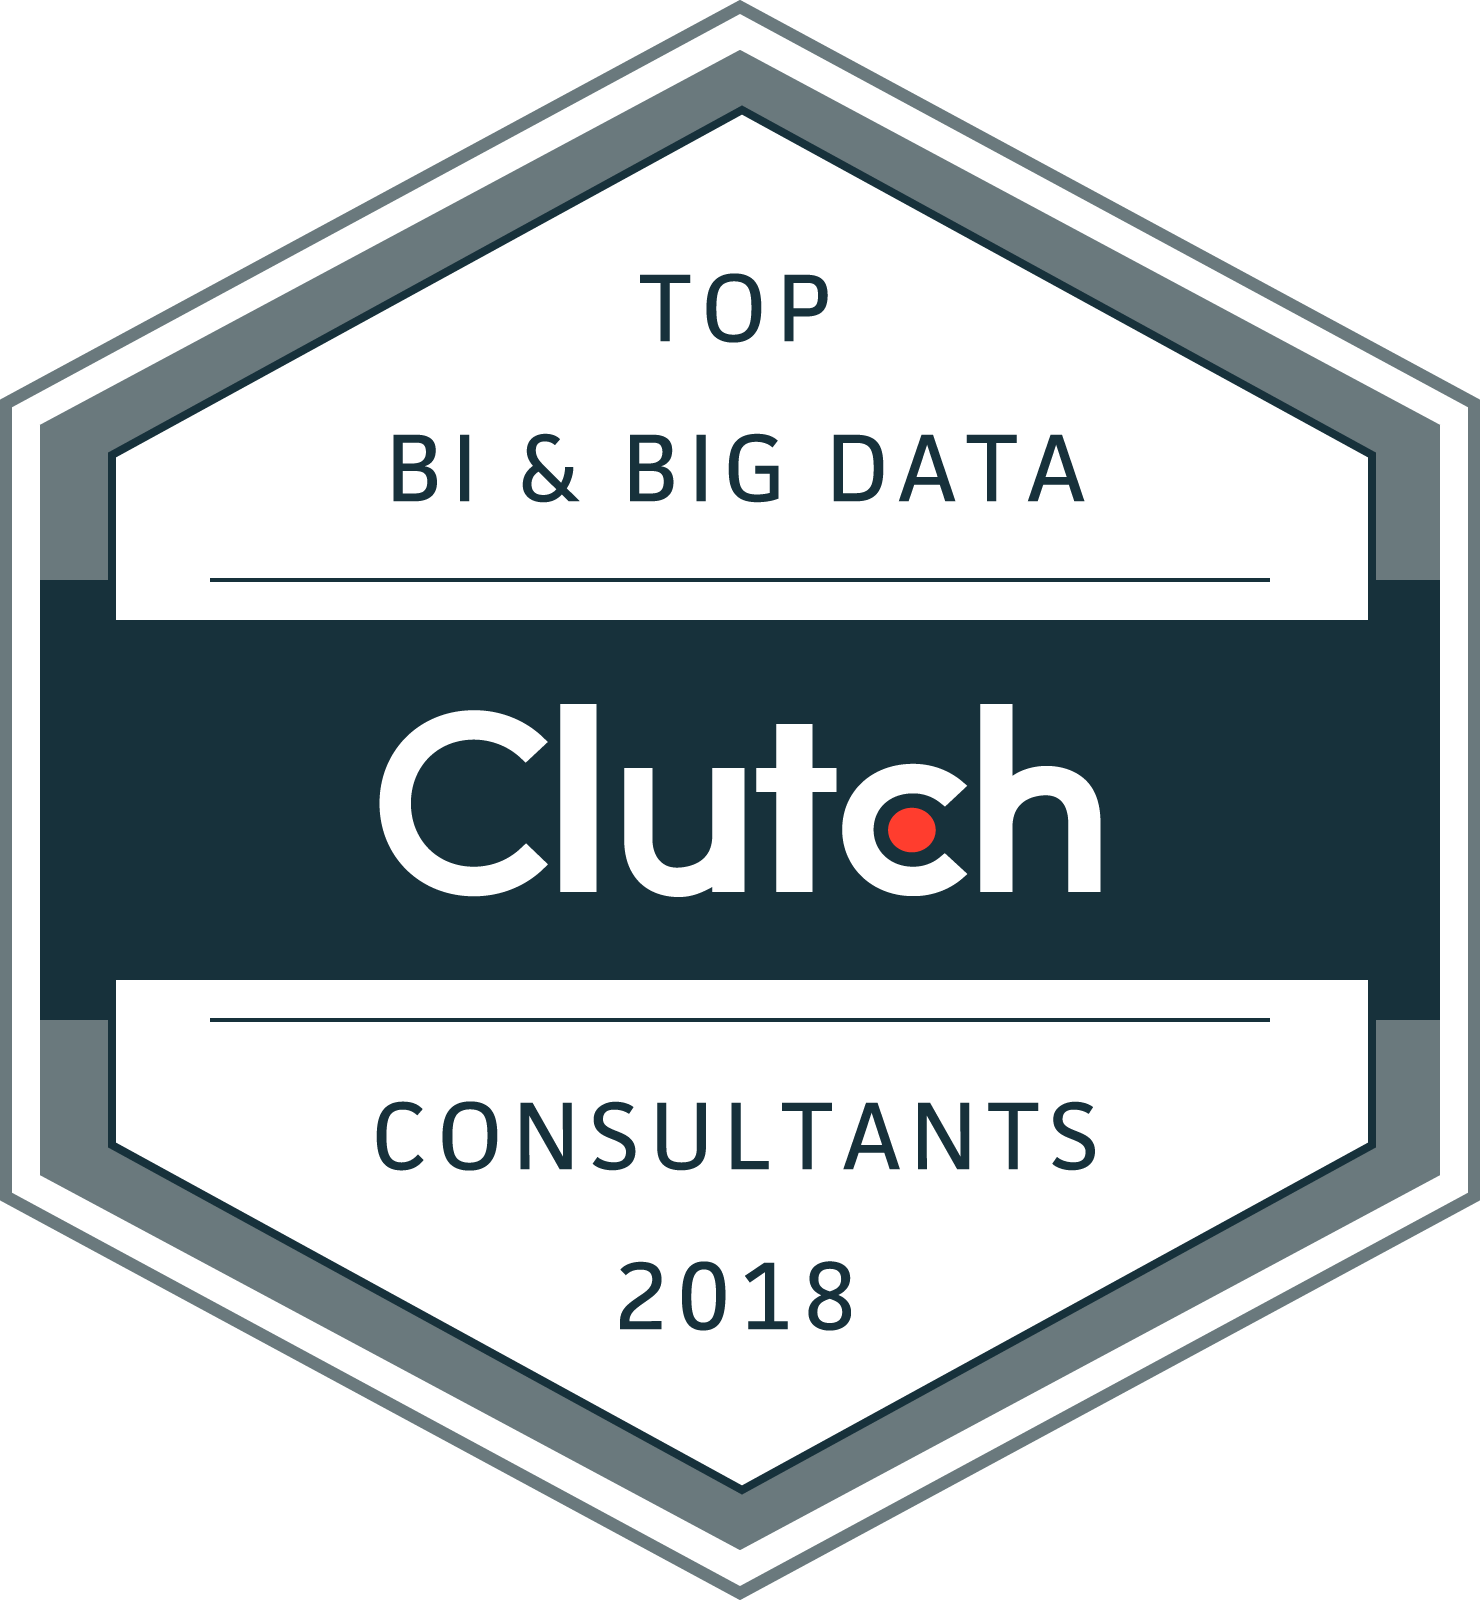 Clutch Top Big Data Company 2018